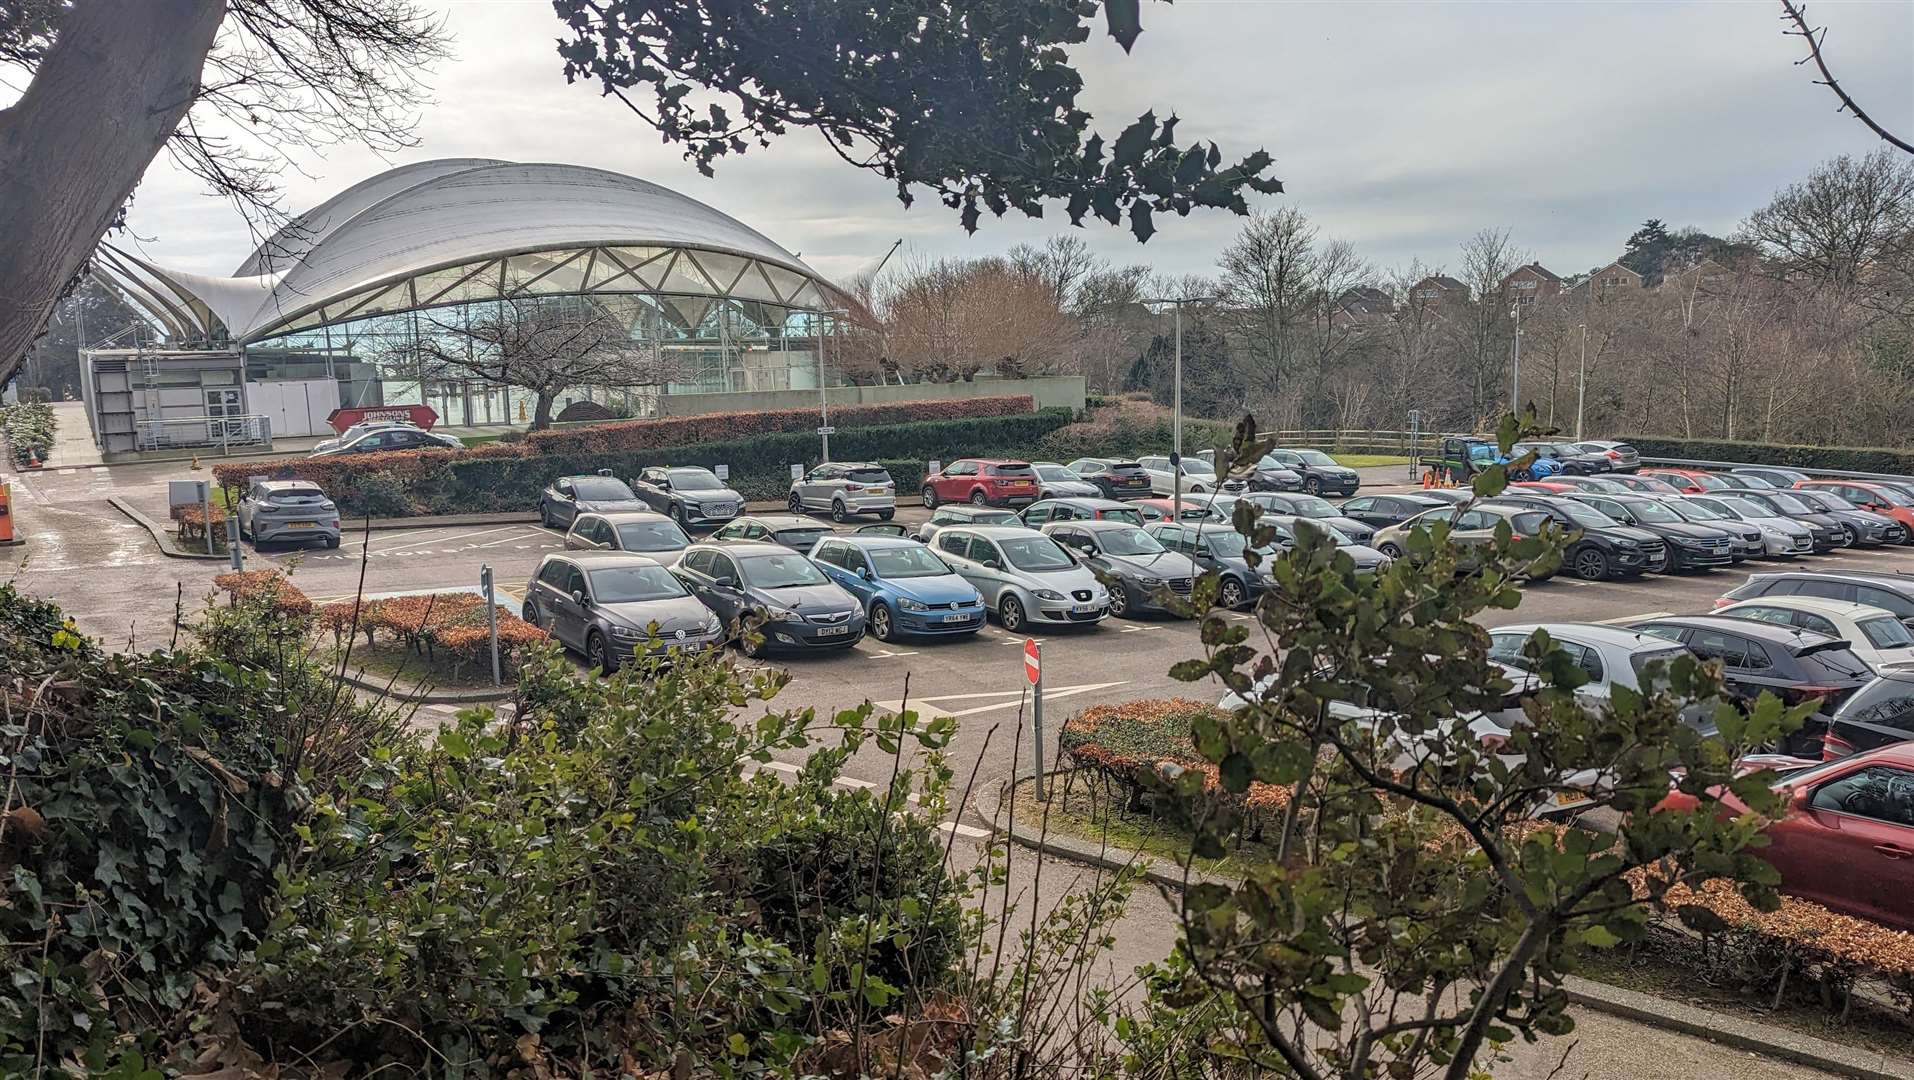 The car park with the Pavilion beyond it